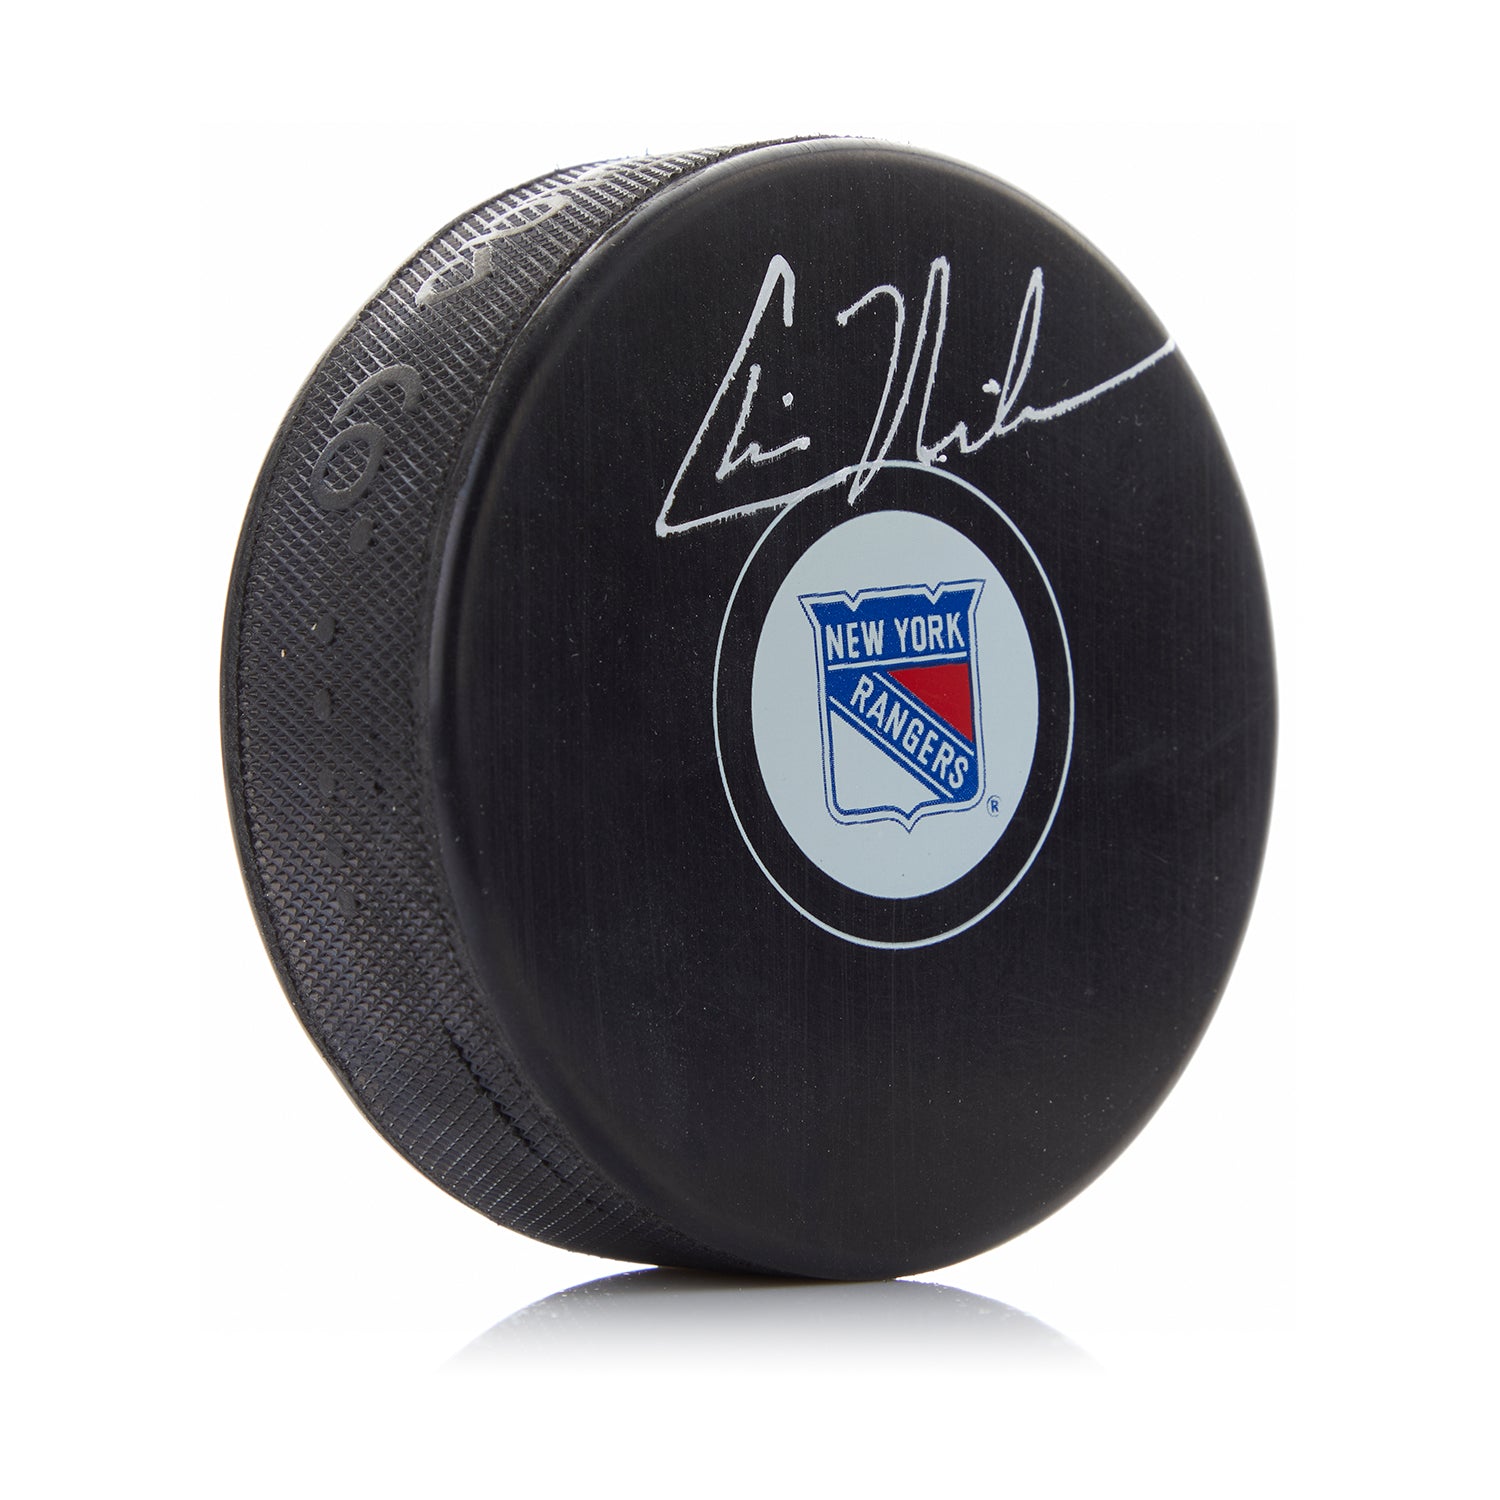 Chris Nilan Autographed New York Rangers Hockey Puck